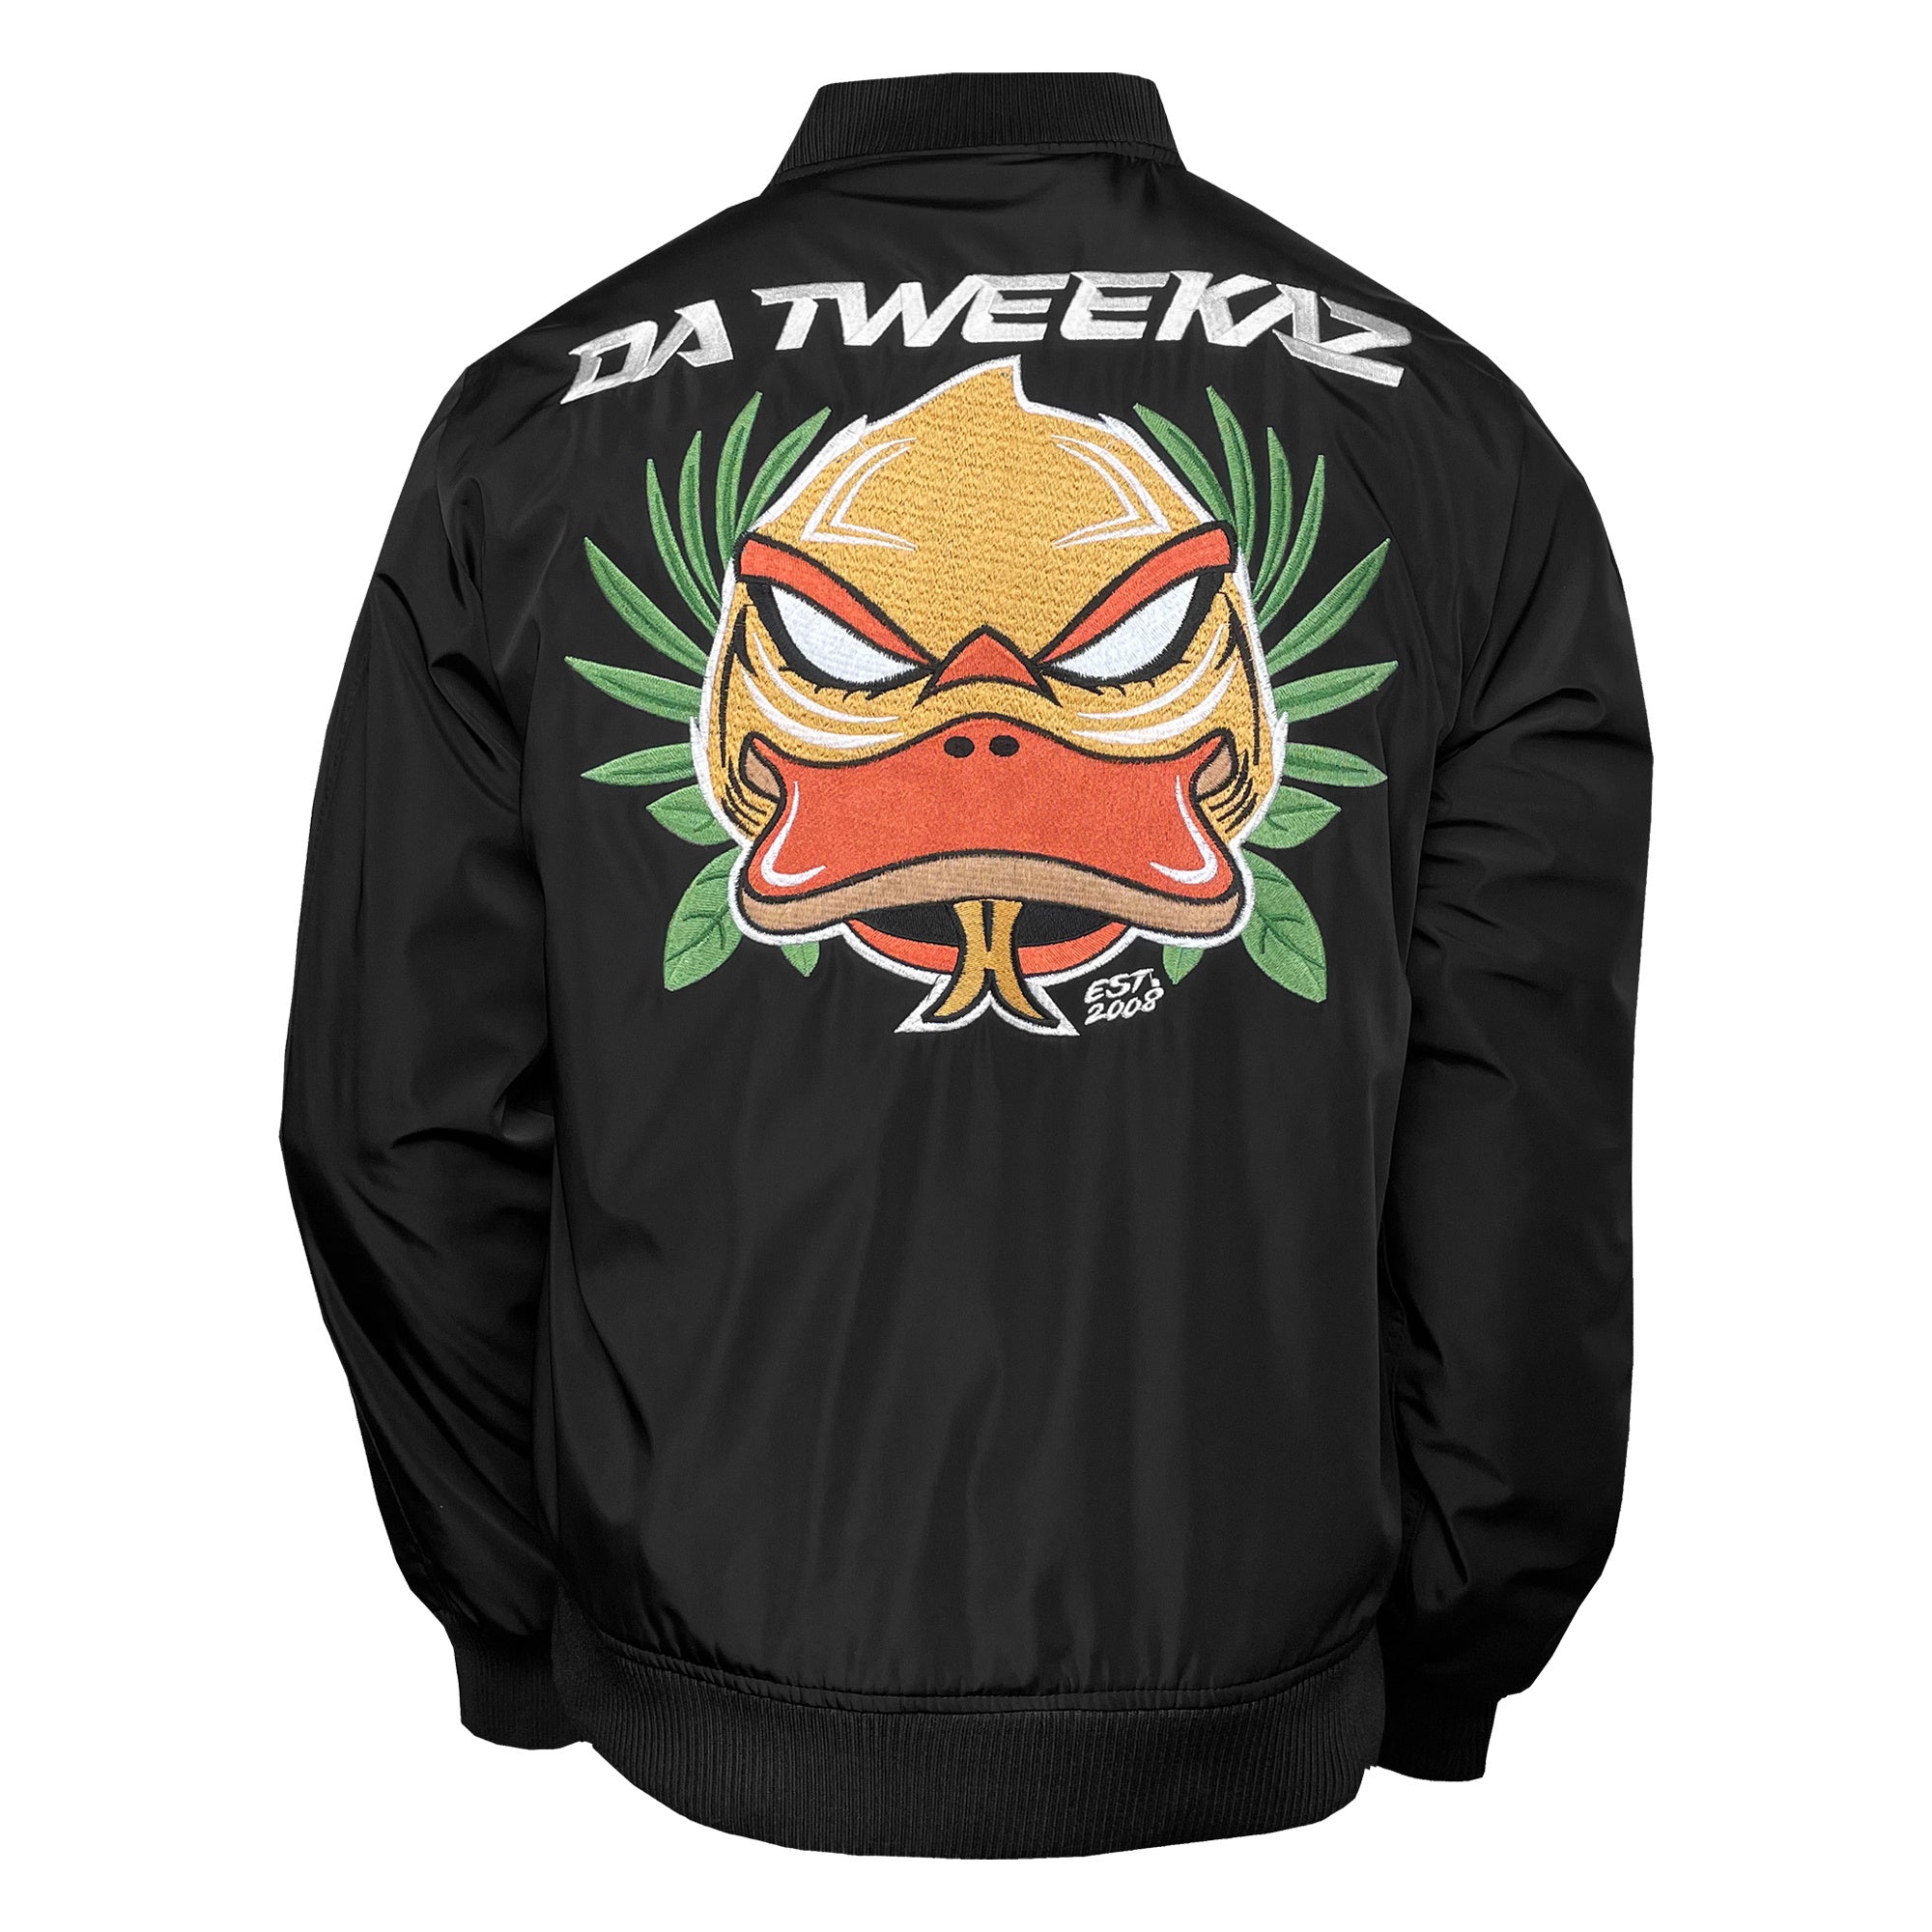 Da Tweekaz - DT Official Bomber Jacket